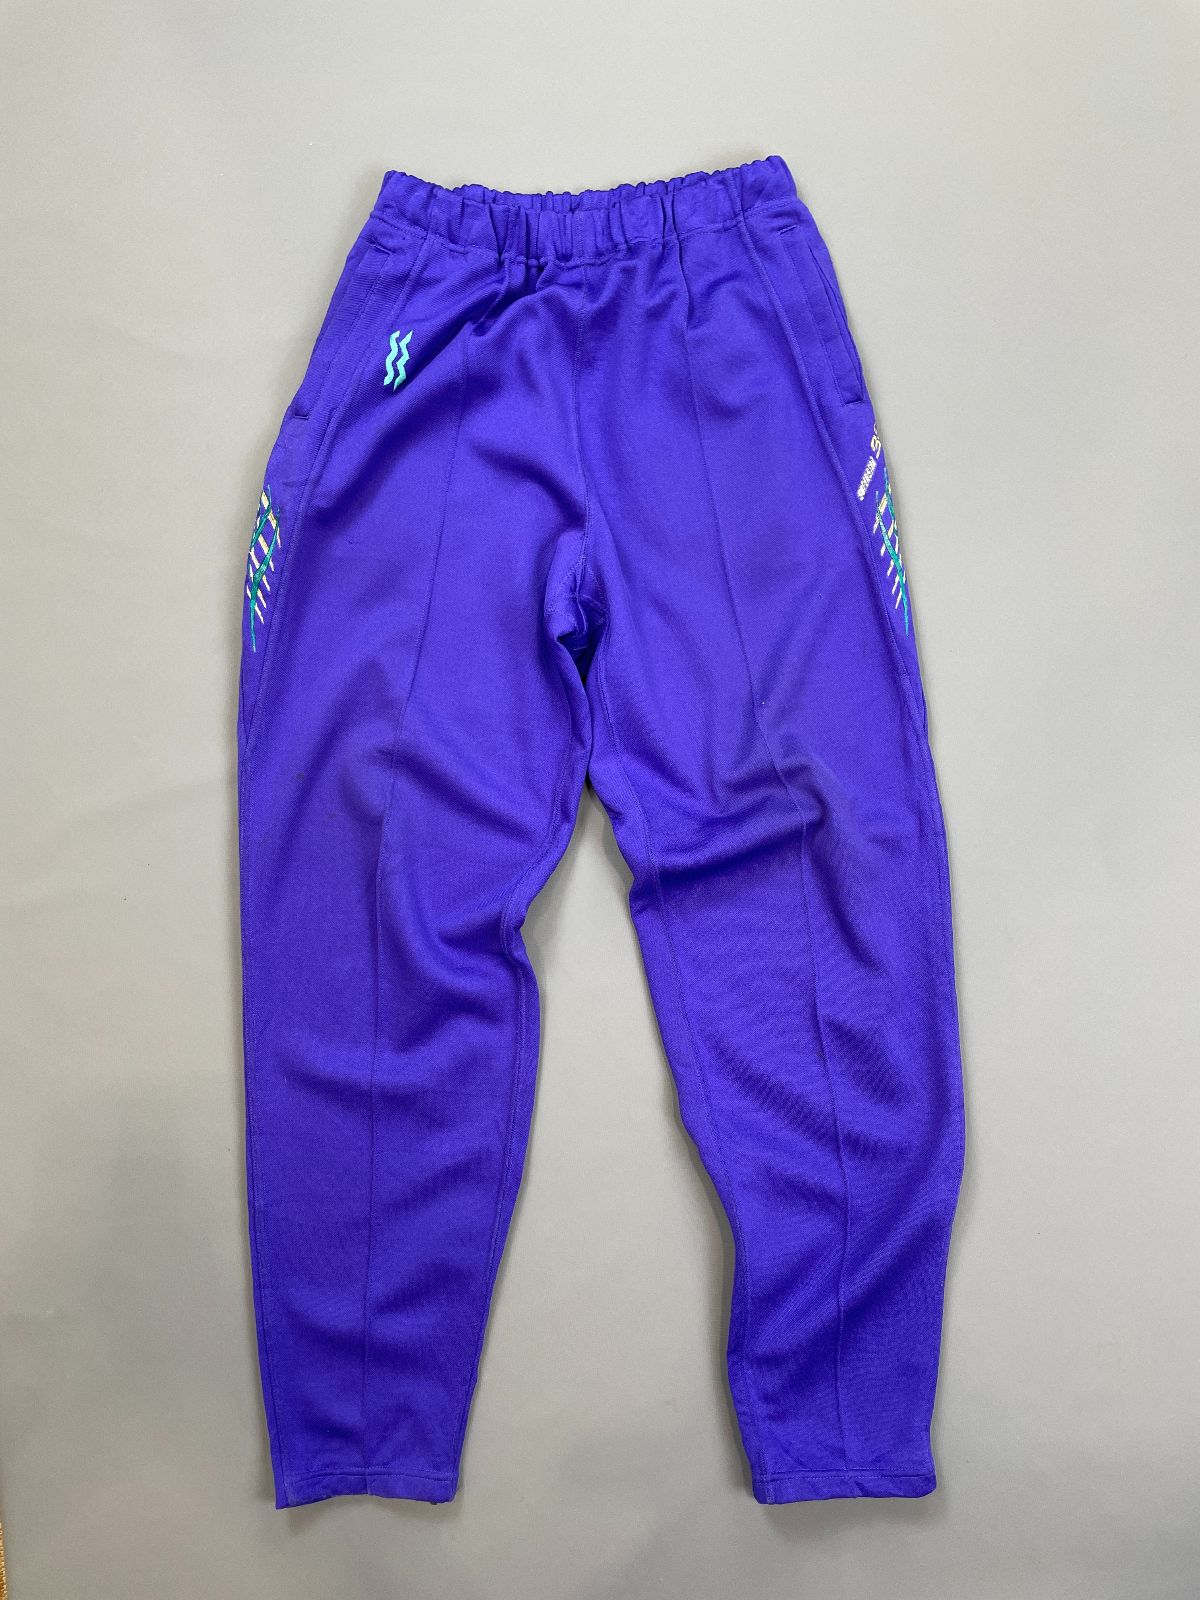 Sales! ZQGJB Women's Fleece Lined Sweatpants Fashion Daisy Print High Waist  Sherpa Lined Winter Warm Cashmere Jogger Pants Super Thick Track Trousers(Gray,M)  - Walmart.com